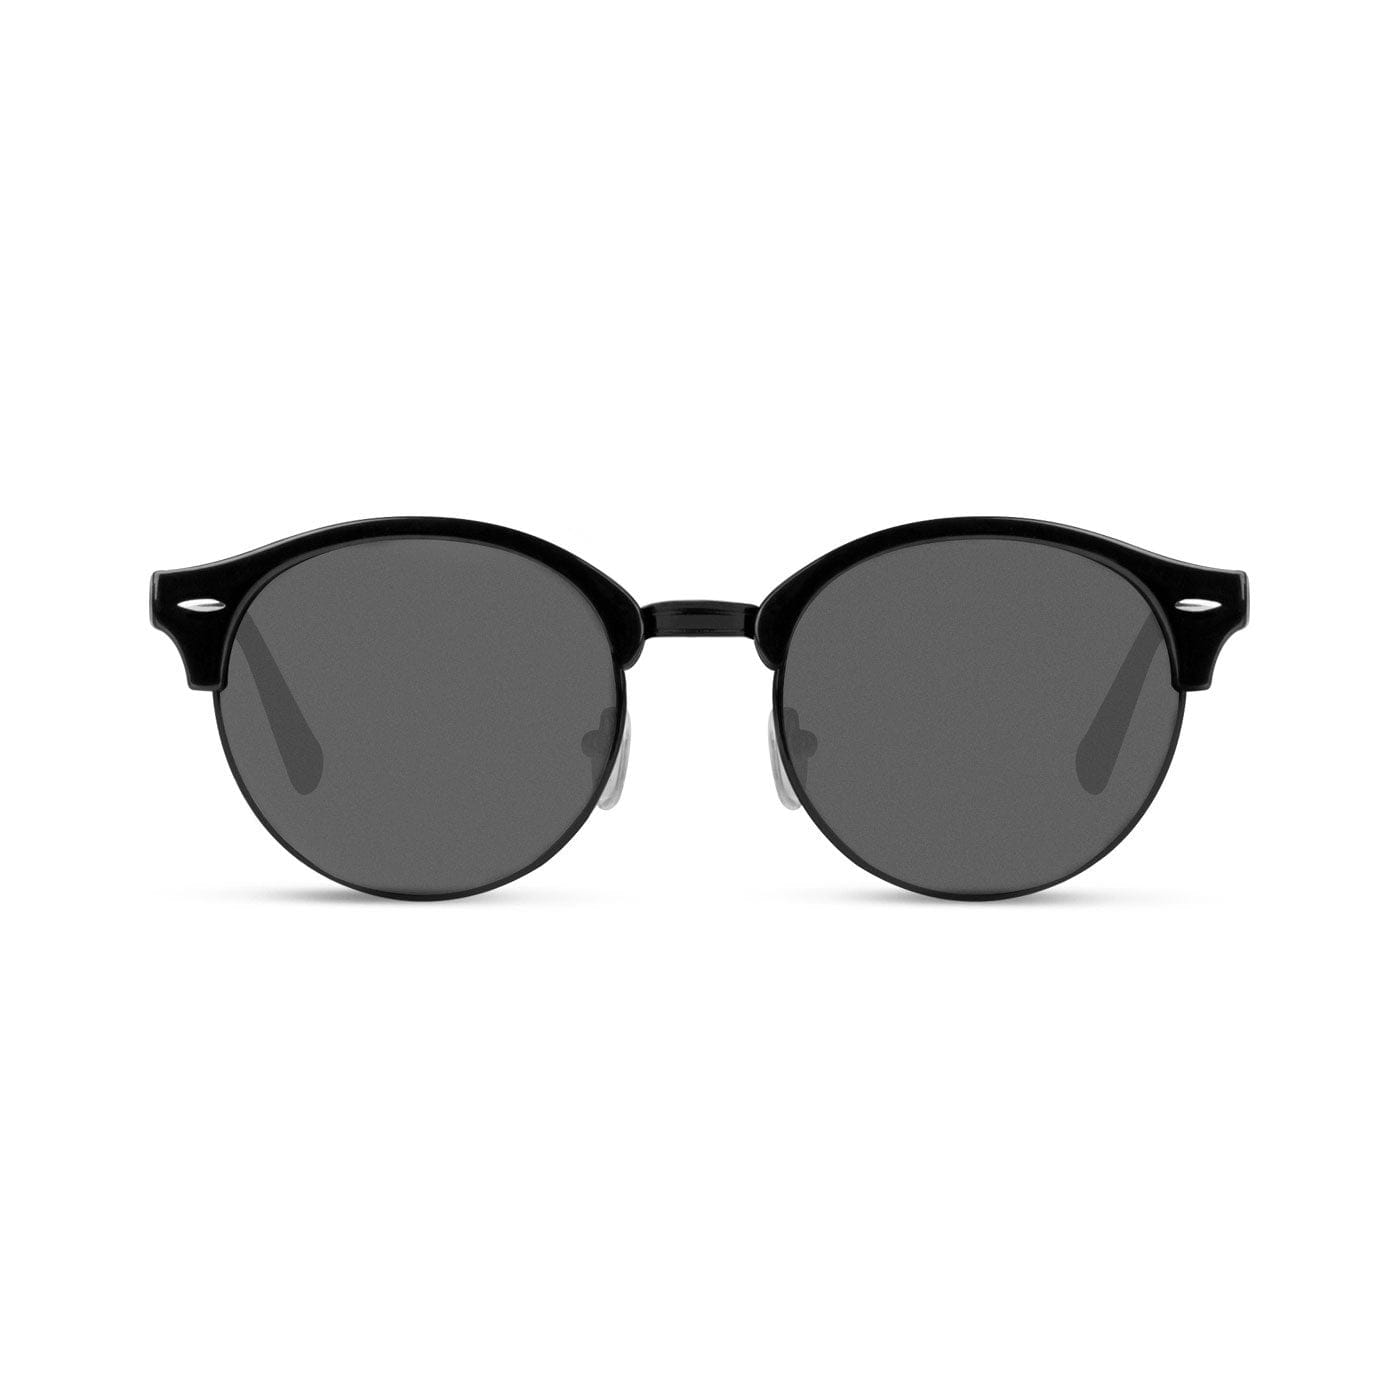 Taruta Shinny Black / Black Sunglasses